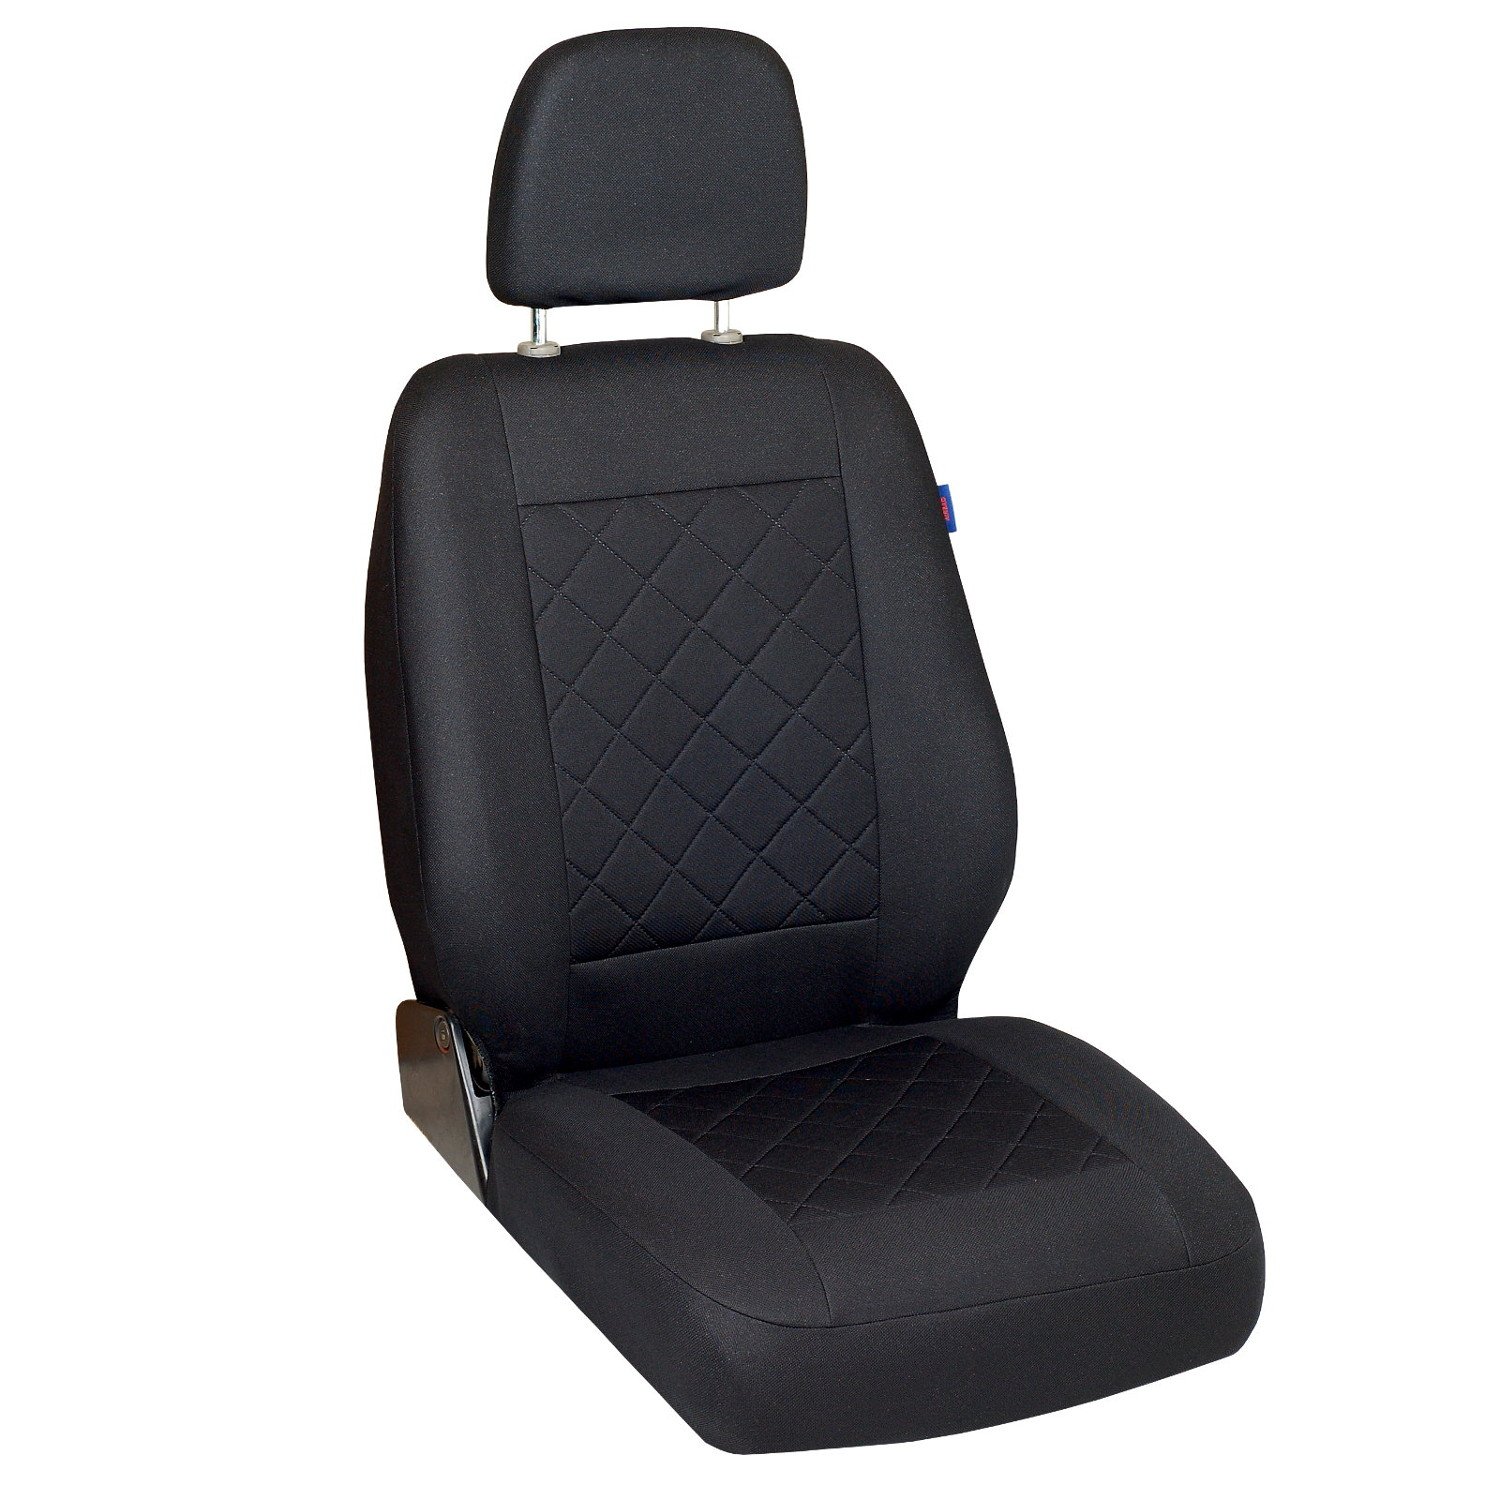 Sprinter Sitzbezug - Fahrersitz - Farbe Premium Schwarz gepresstes Karomuster